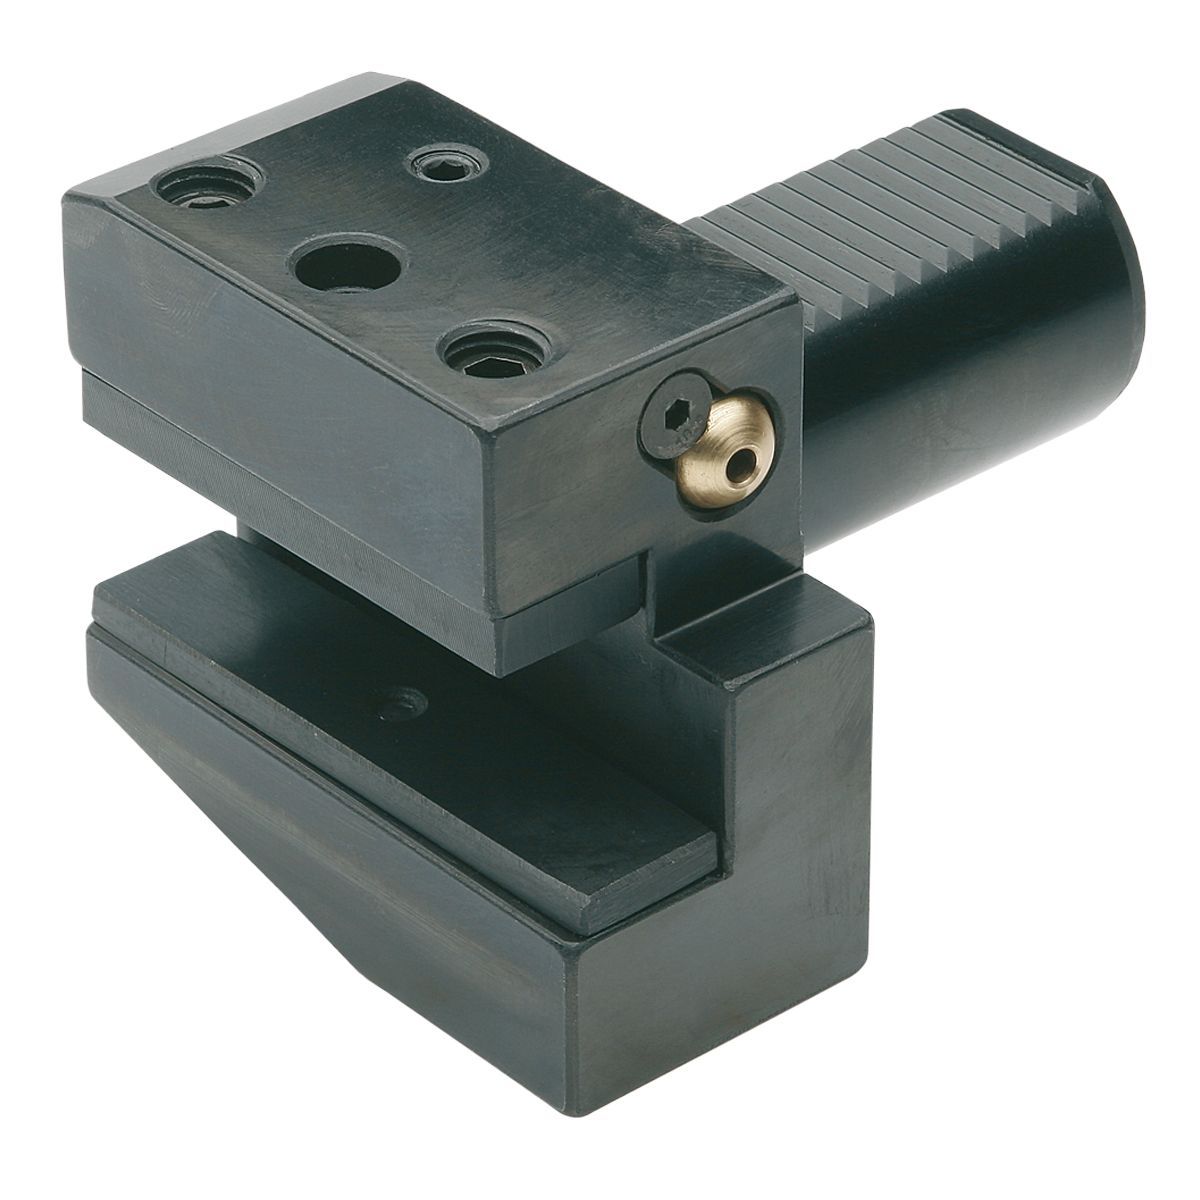 Radial-Werkzeughalter B1-50x32-55 DIN 69880 (ISO 10889)